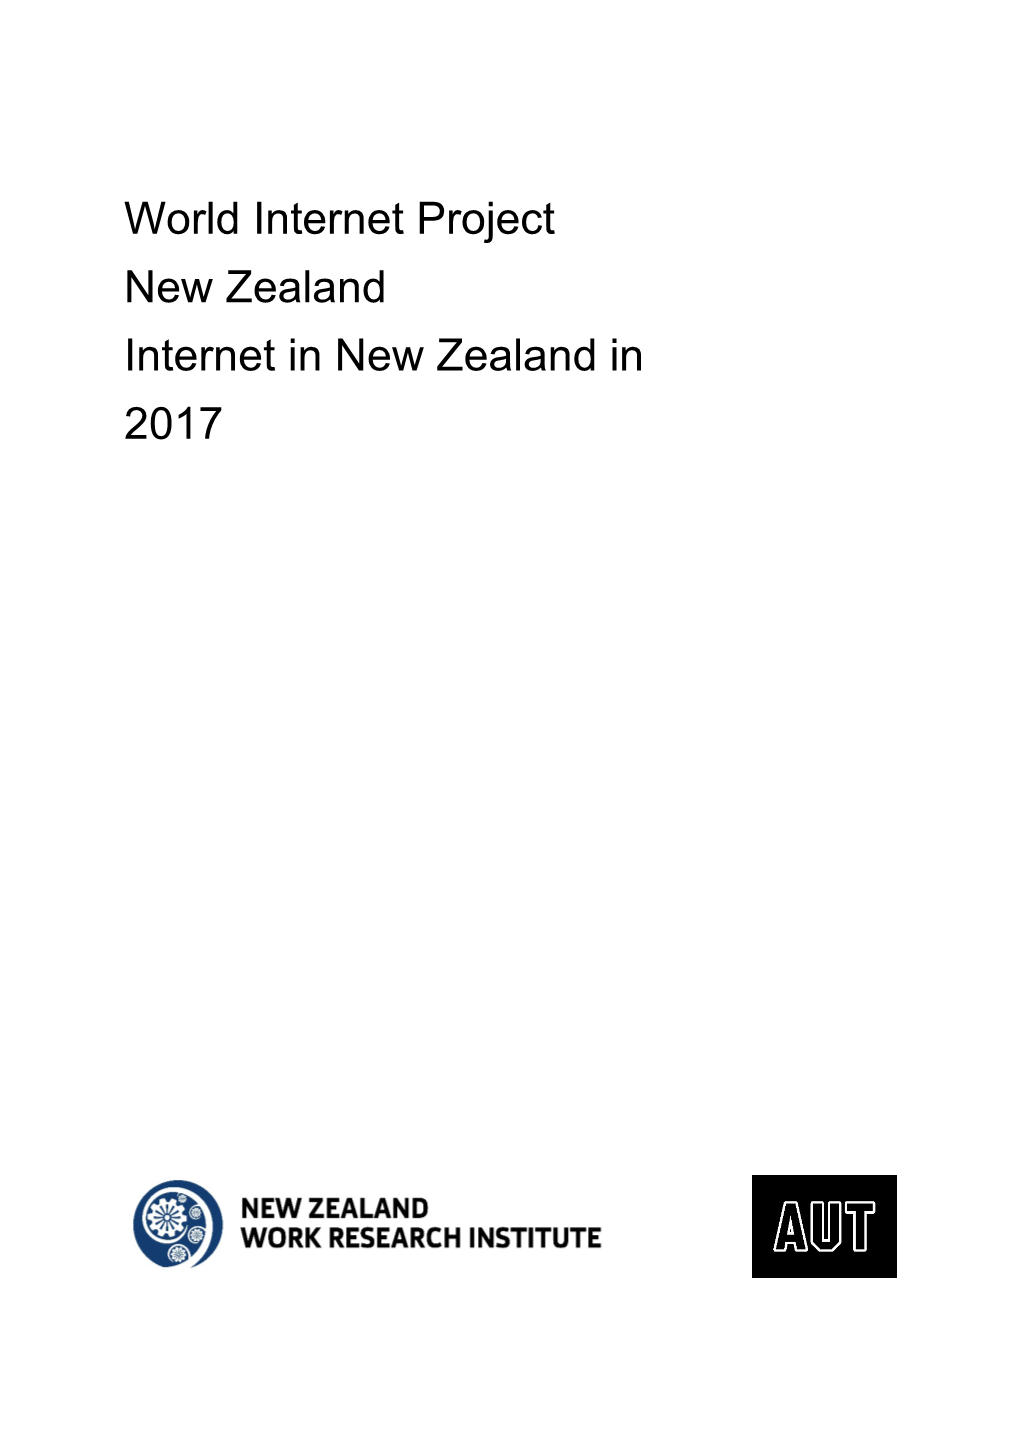 World Internet Project New Zealand Internet in New Zealand in 2017